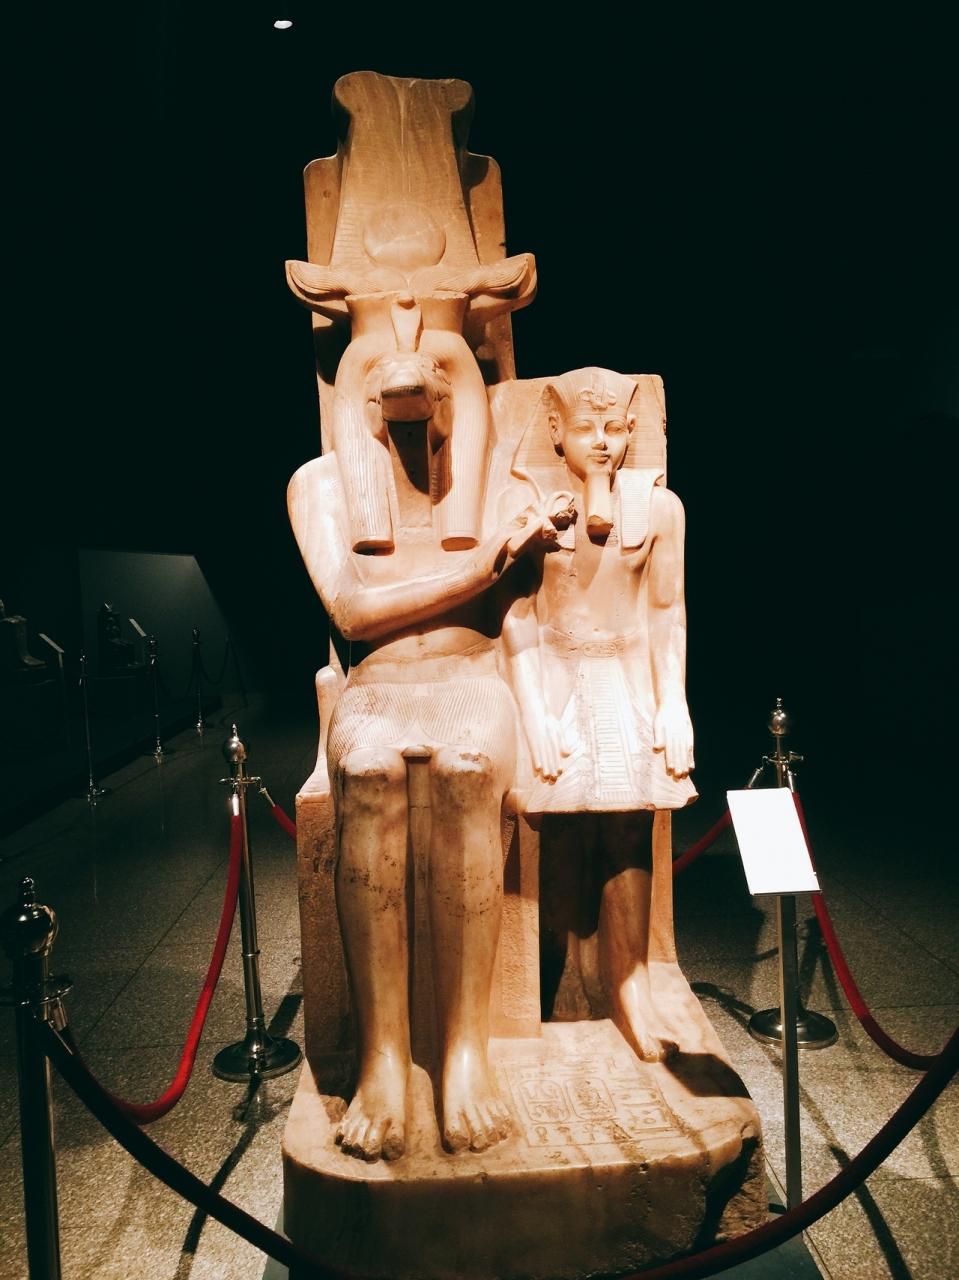 Luxor Museum Luxor ルクソール博物館 17年12月24日ルクソール ルクソール エジプト の旅行記 ブログ By Noelさん フォートラベル